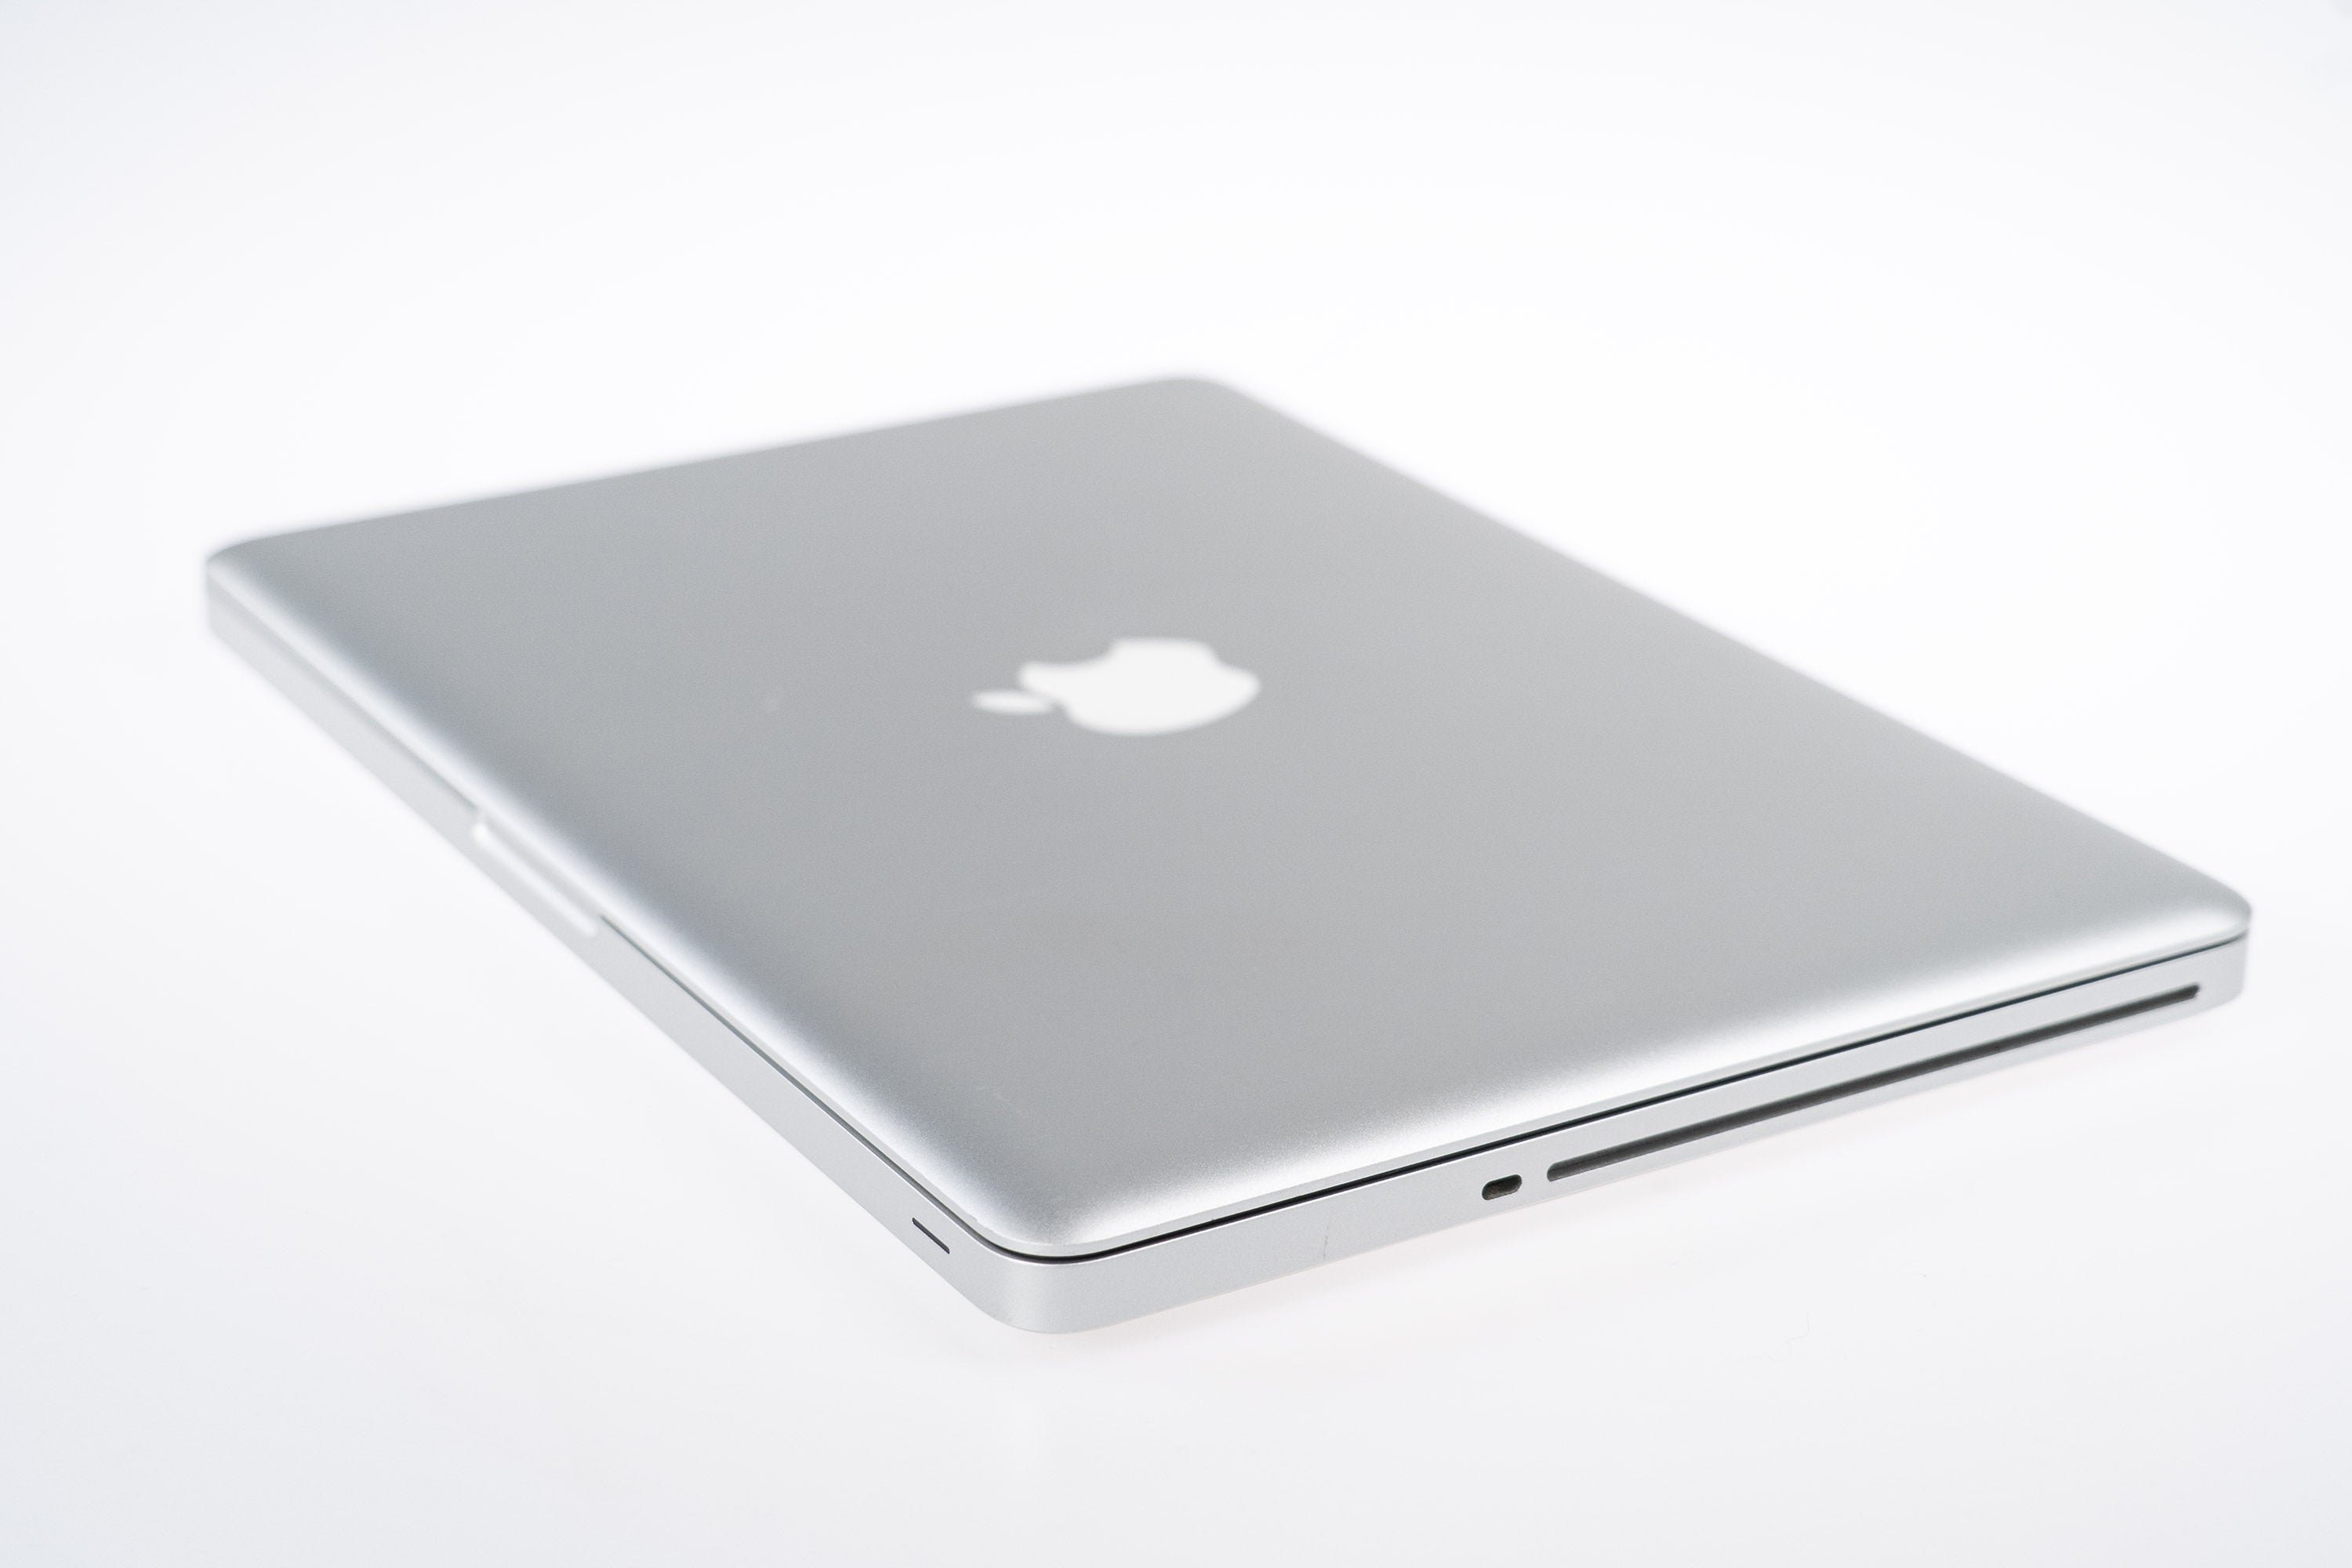 Apple MacBook Pro (Mid 2010) 13-inch 2.4 GHz Core 2 Duo 8GB RAM 1TB Storage  - Silver